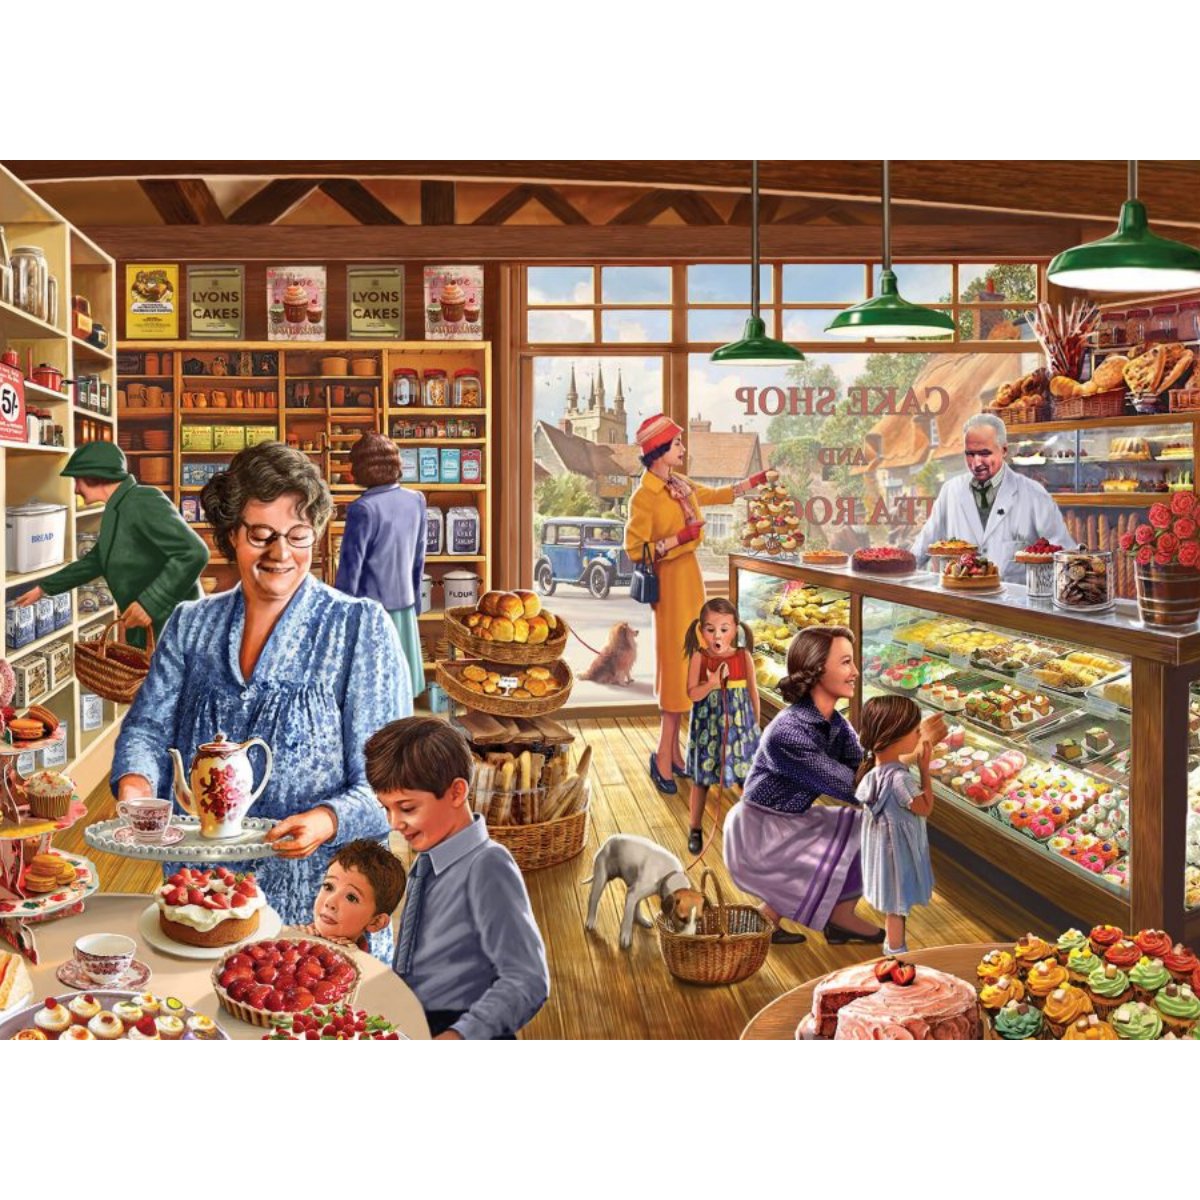 Ye Olde Cake Shoppe Jigsaw Puzzle (1000 Pieces) - Phillips Hobbies